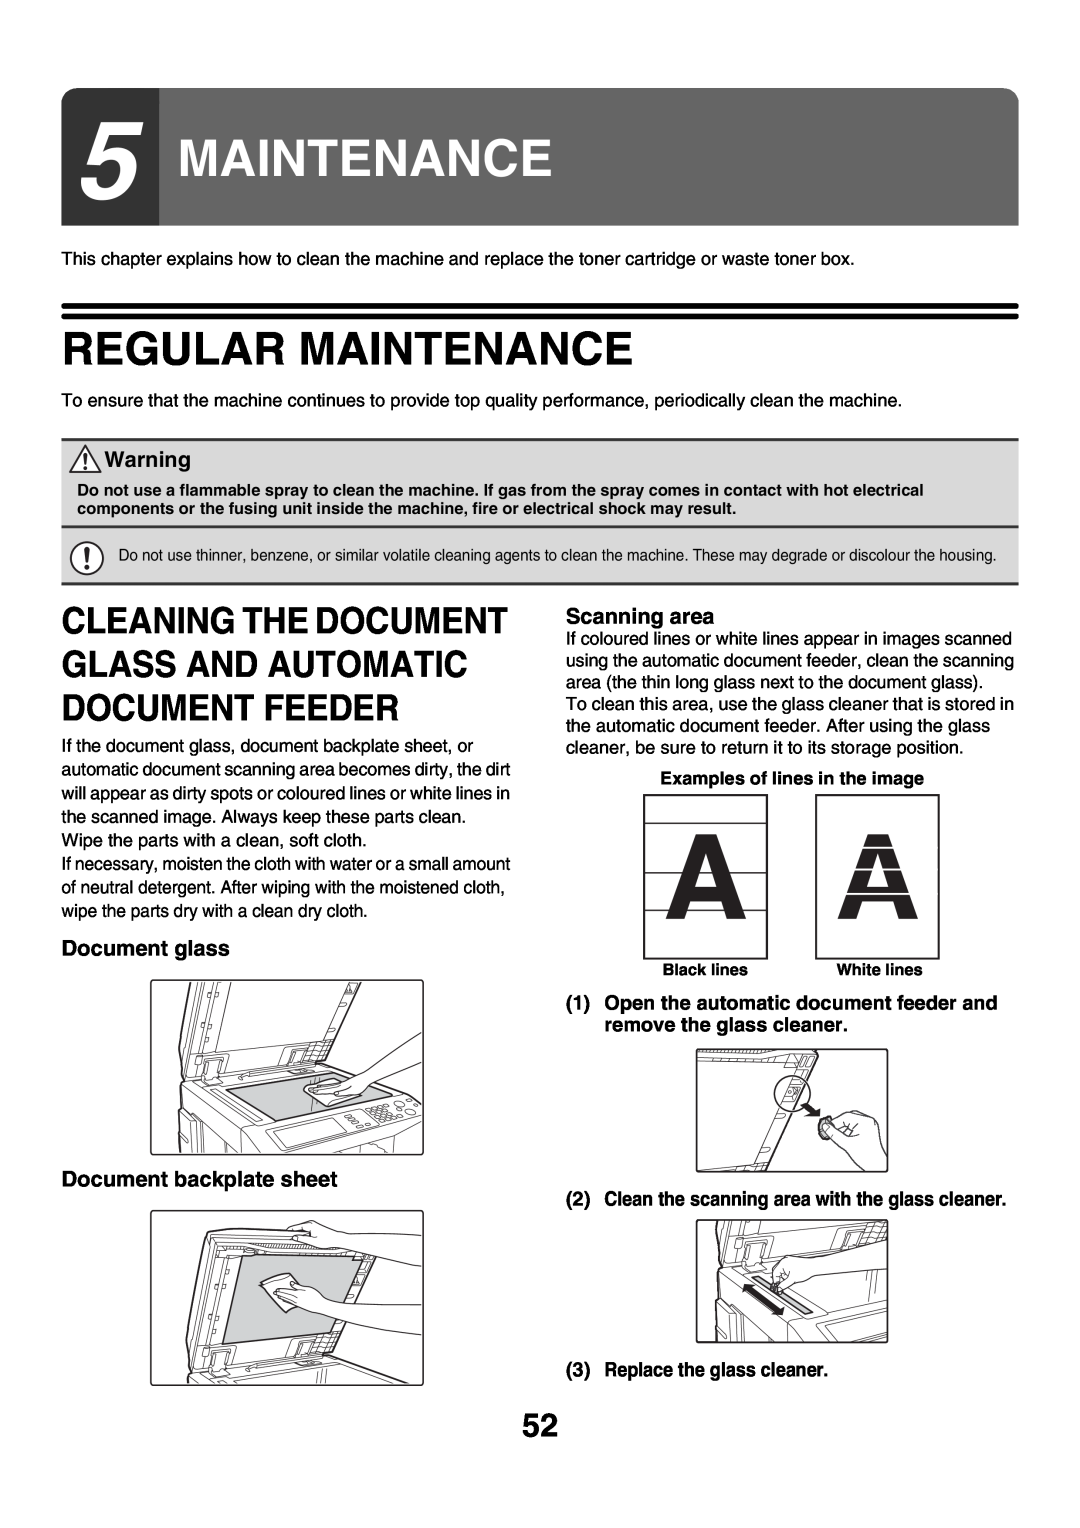 Sharp MX-2700G, MX-2300G manual Regular Maintenance, Document glass, Scanning area, Document backplate sheet 